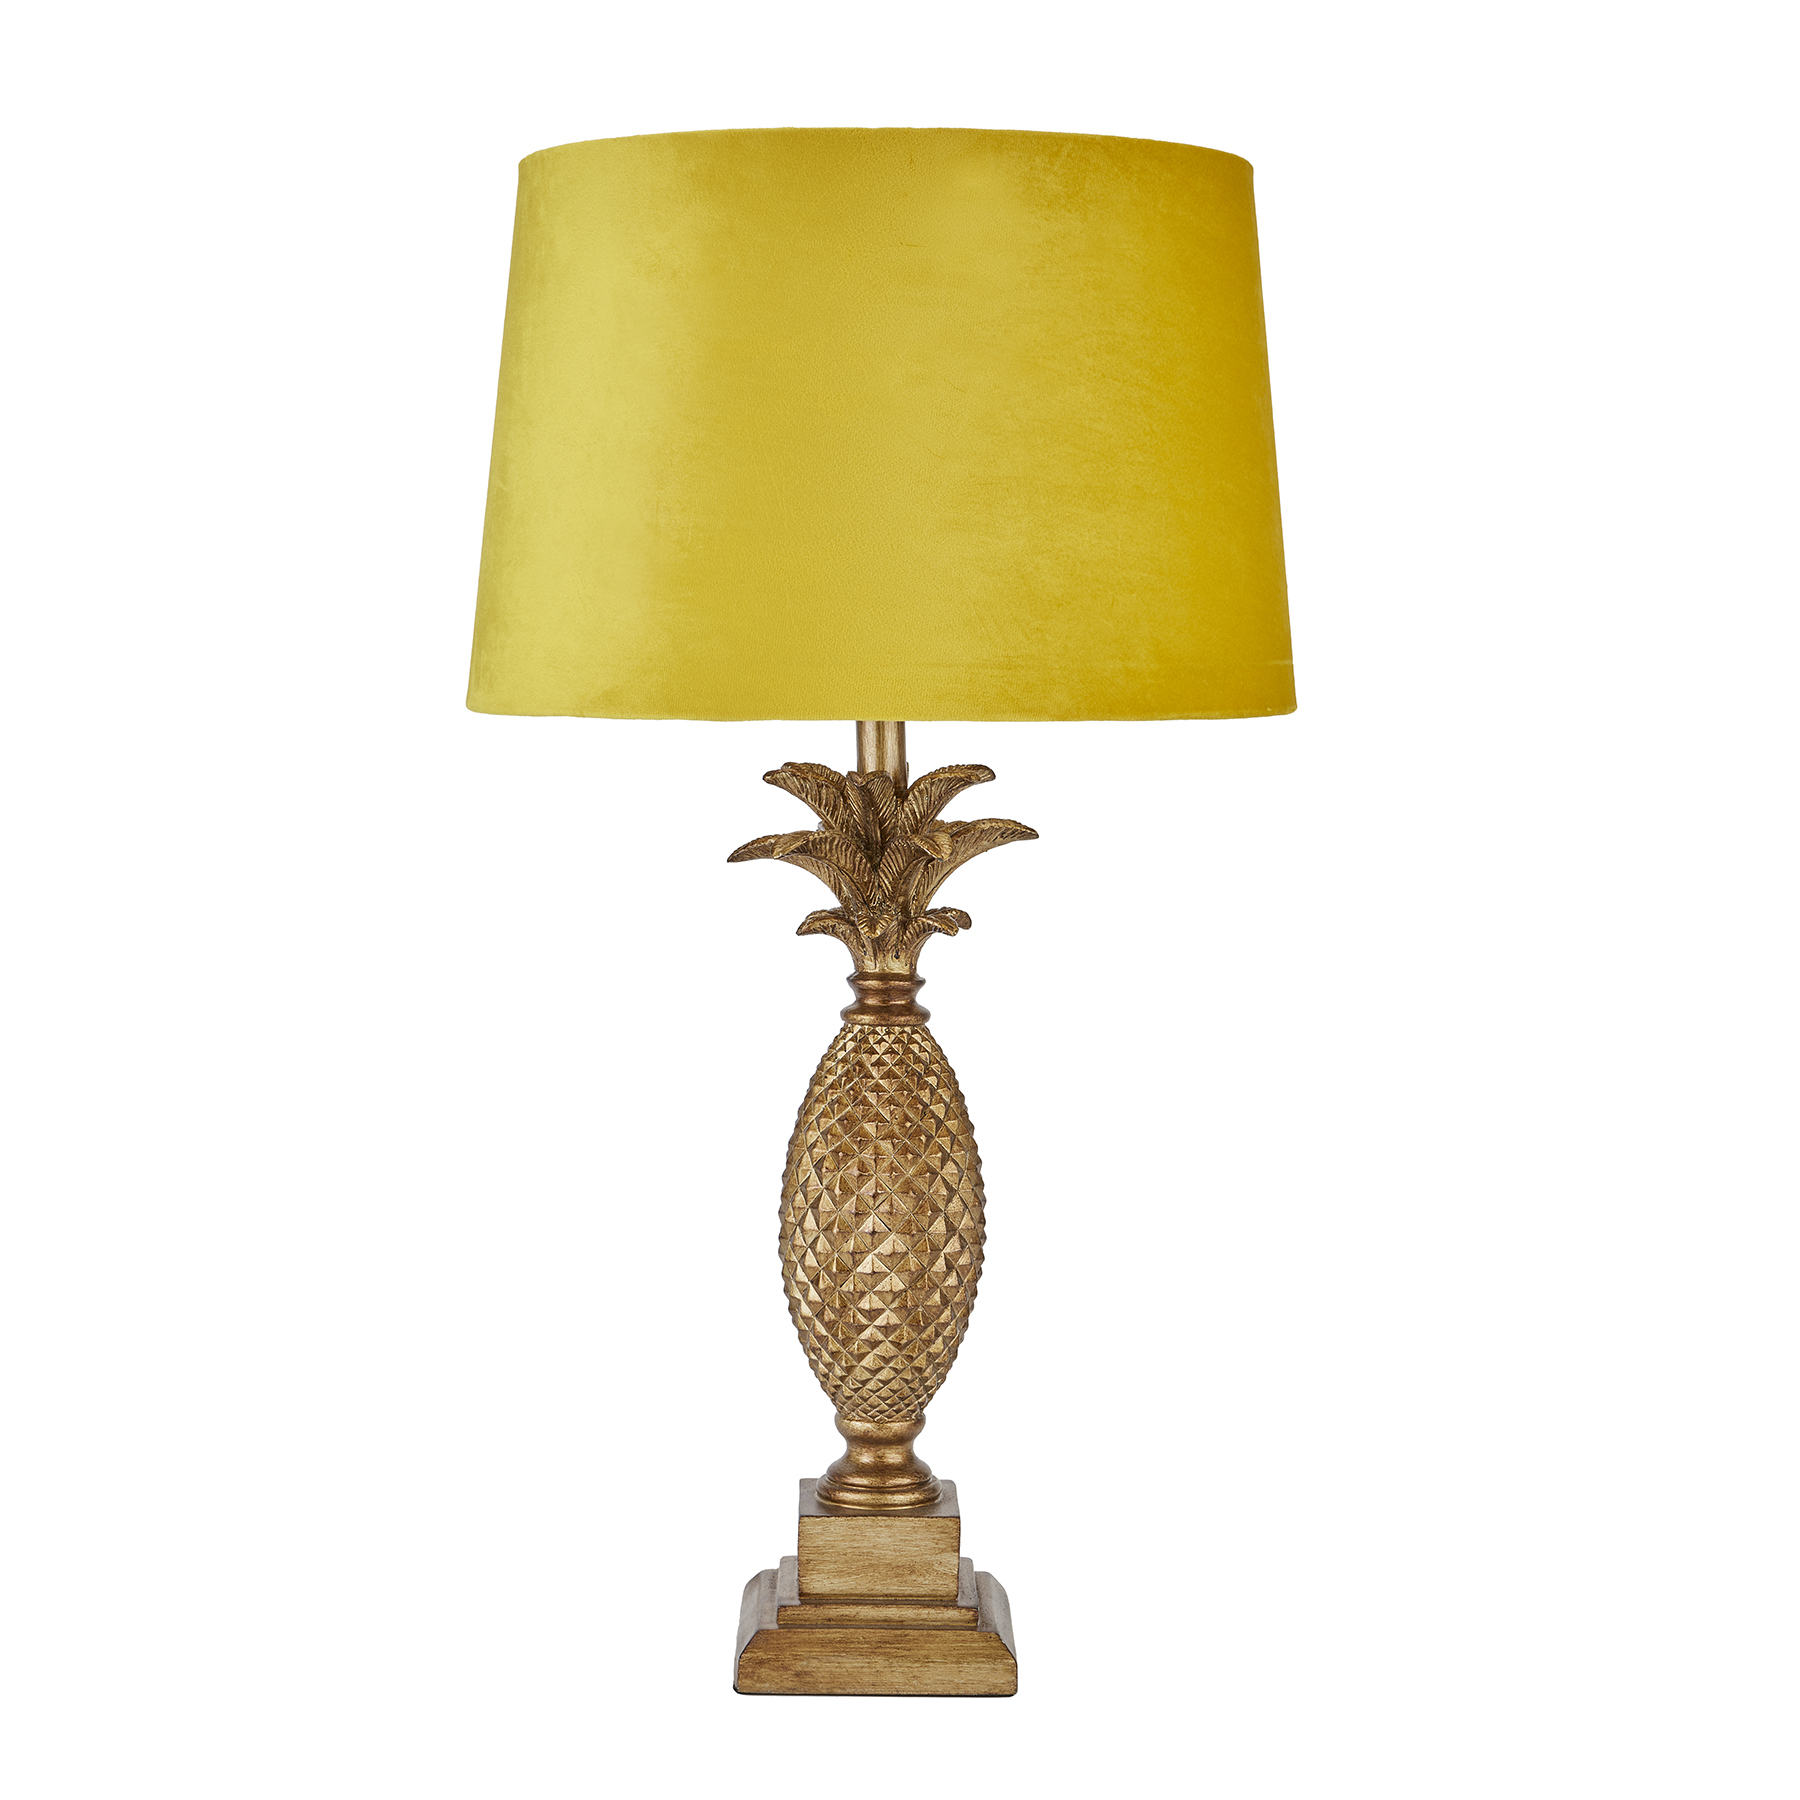 Tall Gold Pineapple Lamp With Mustard Velvet Shade - Image 1